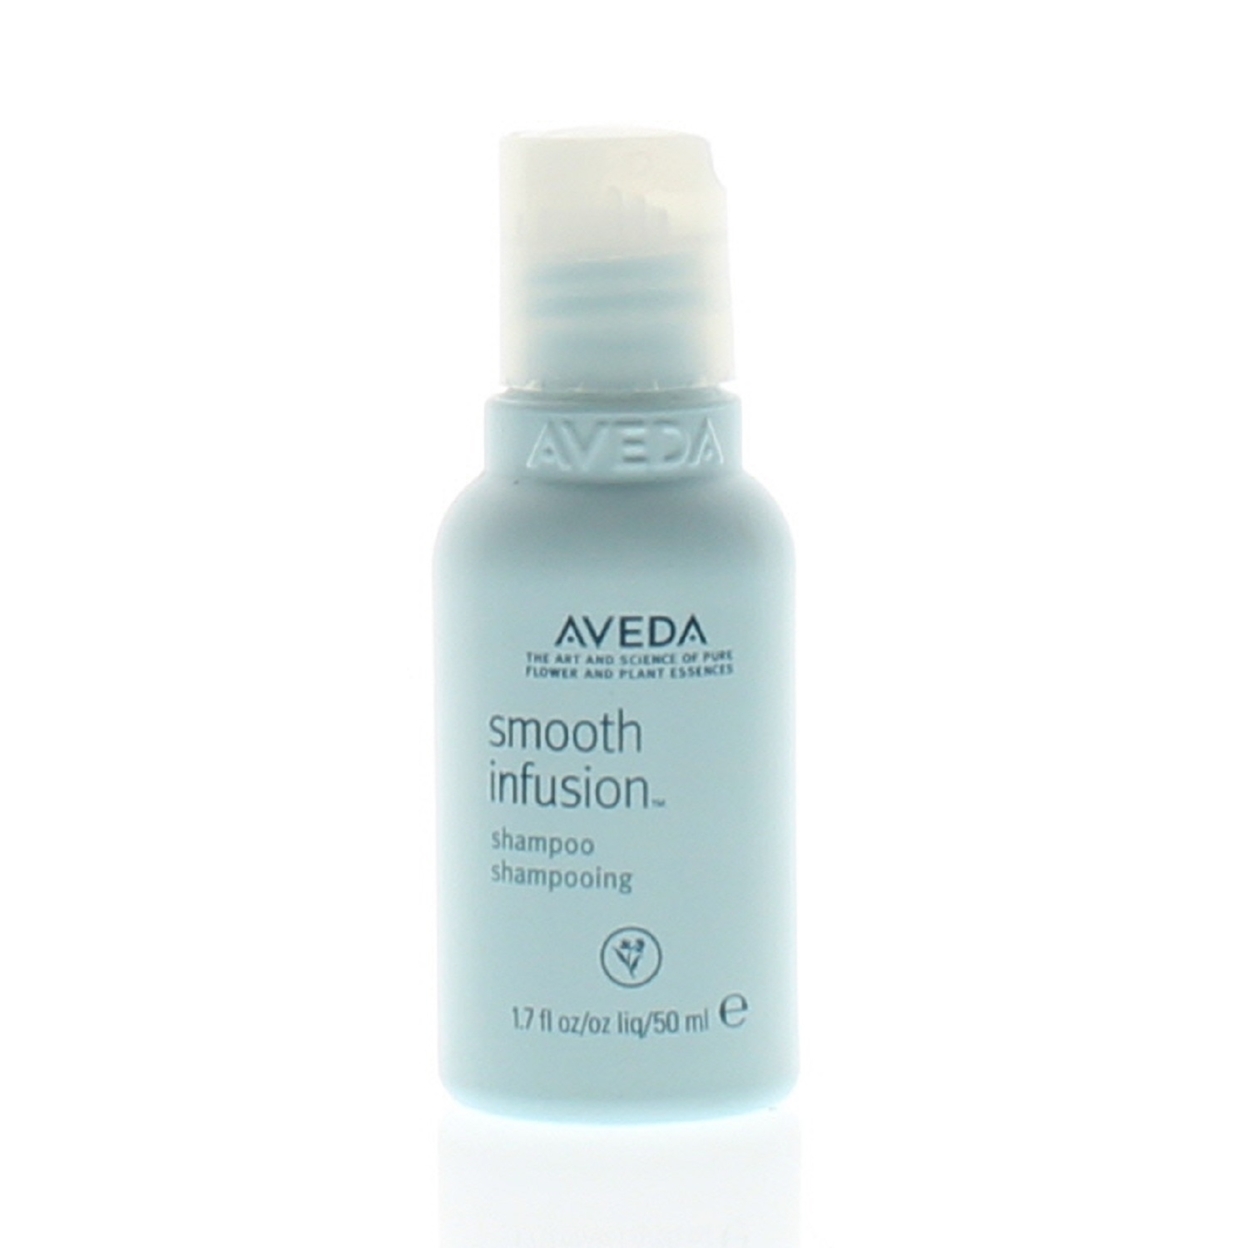 Aveda Smooth Infusion Shampoo 1.7oz/50ml